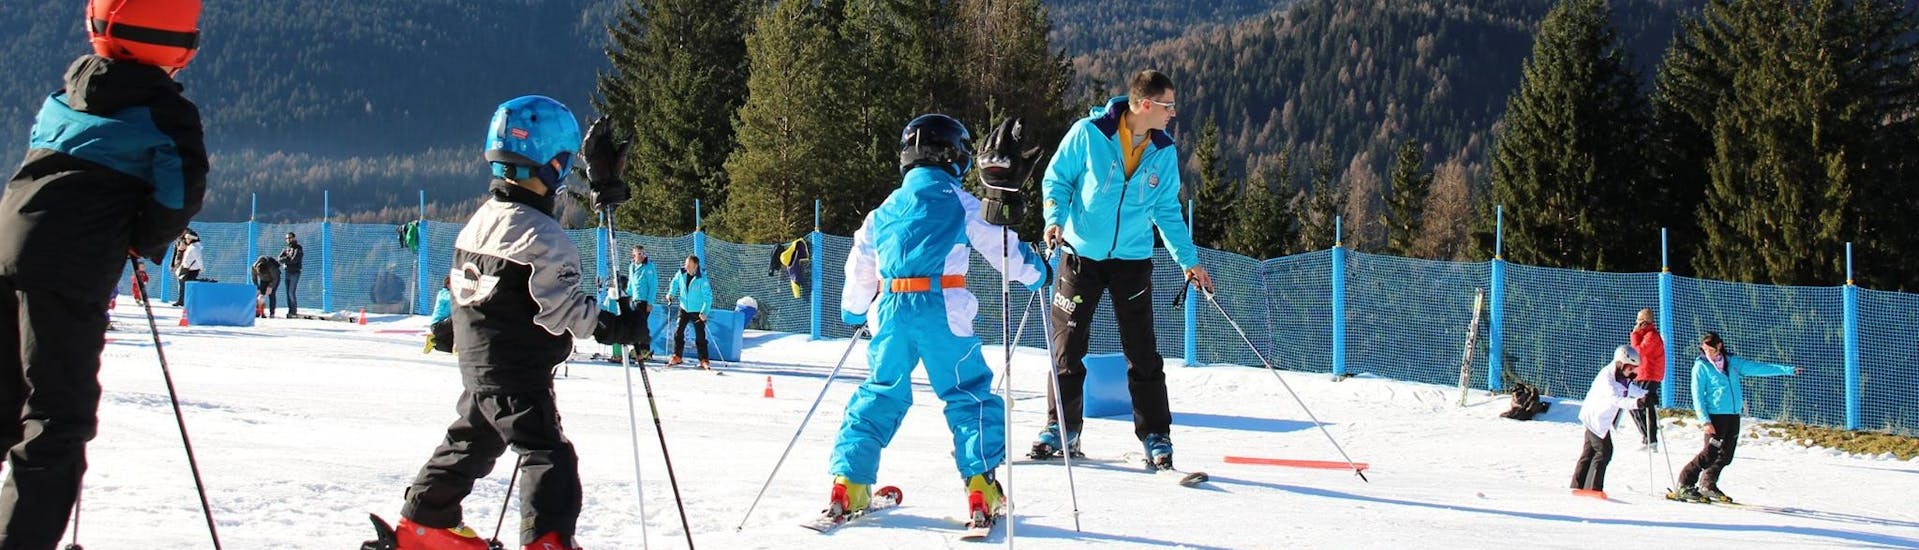 Kinderskikurse für erfahrene Skifahrer (5-13 J.) mit der Scuola Sci Antelao San Vito di Cadore.